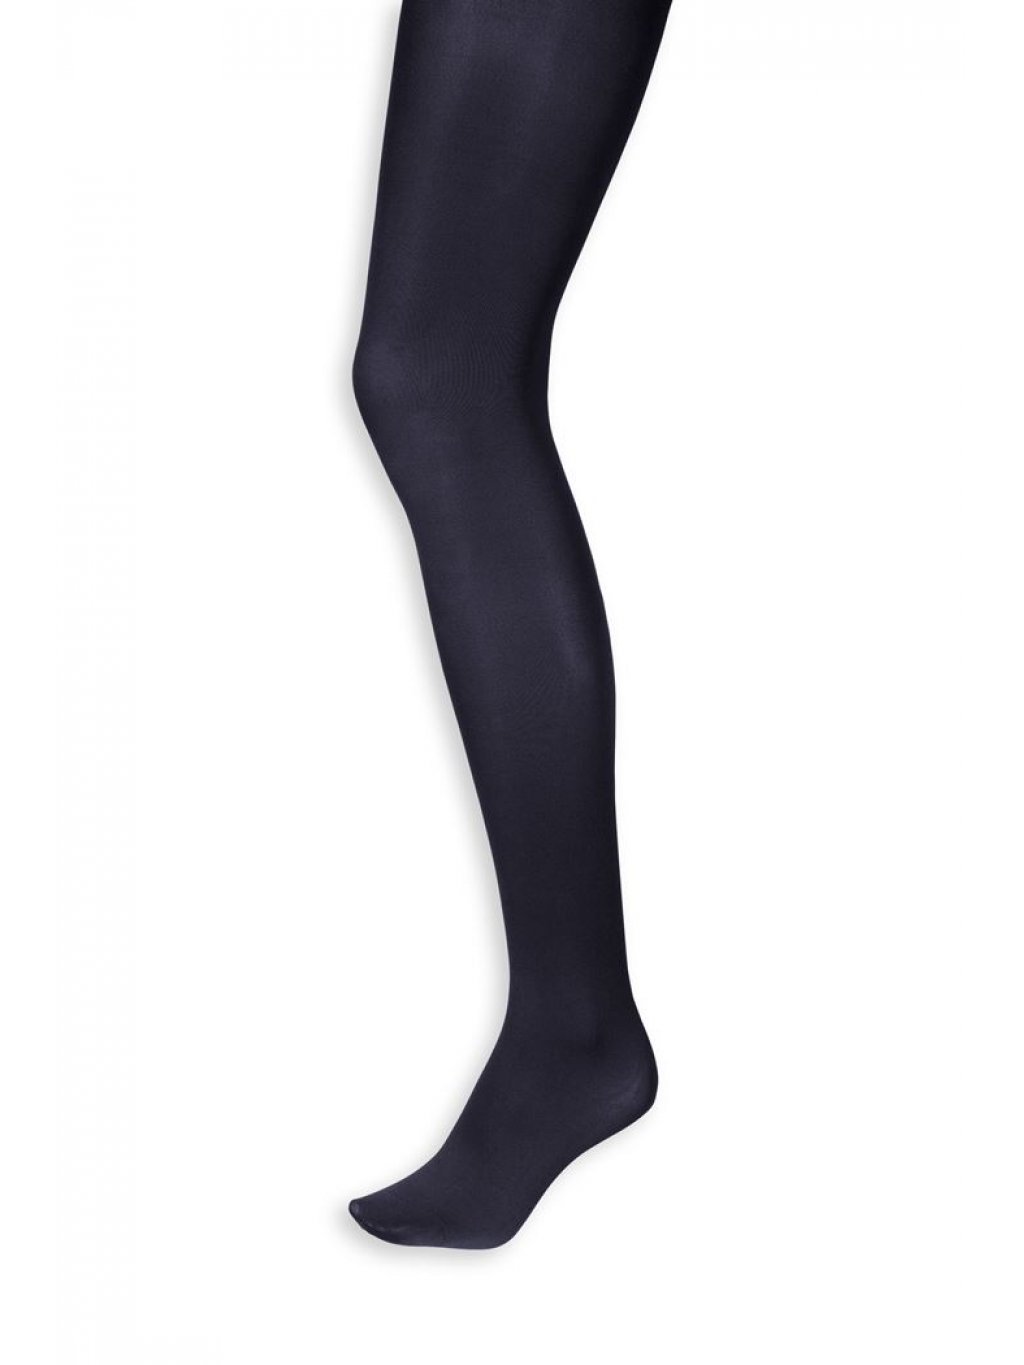 Silonky Kyra Stockings černé